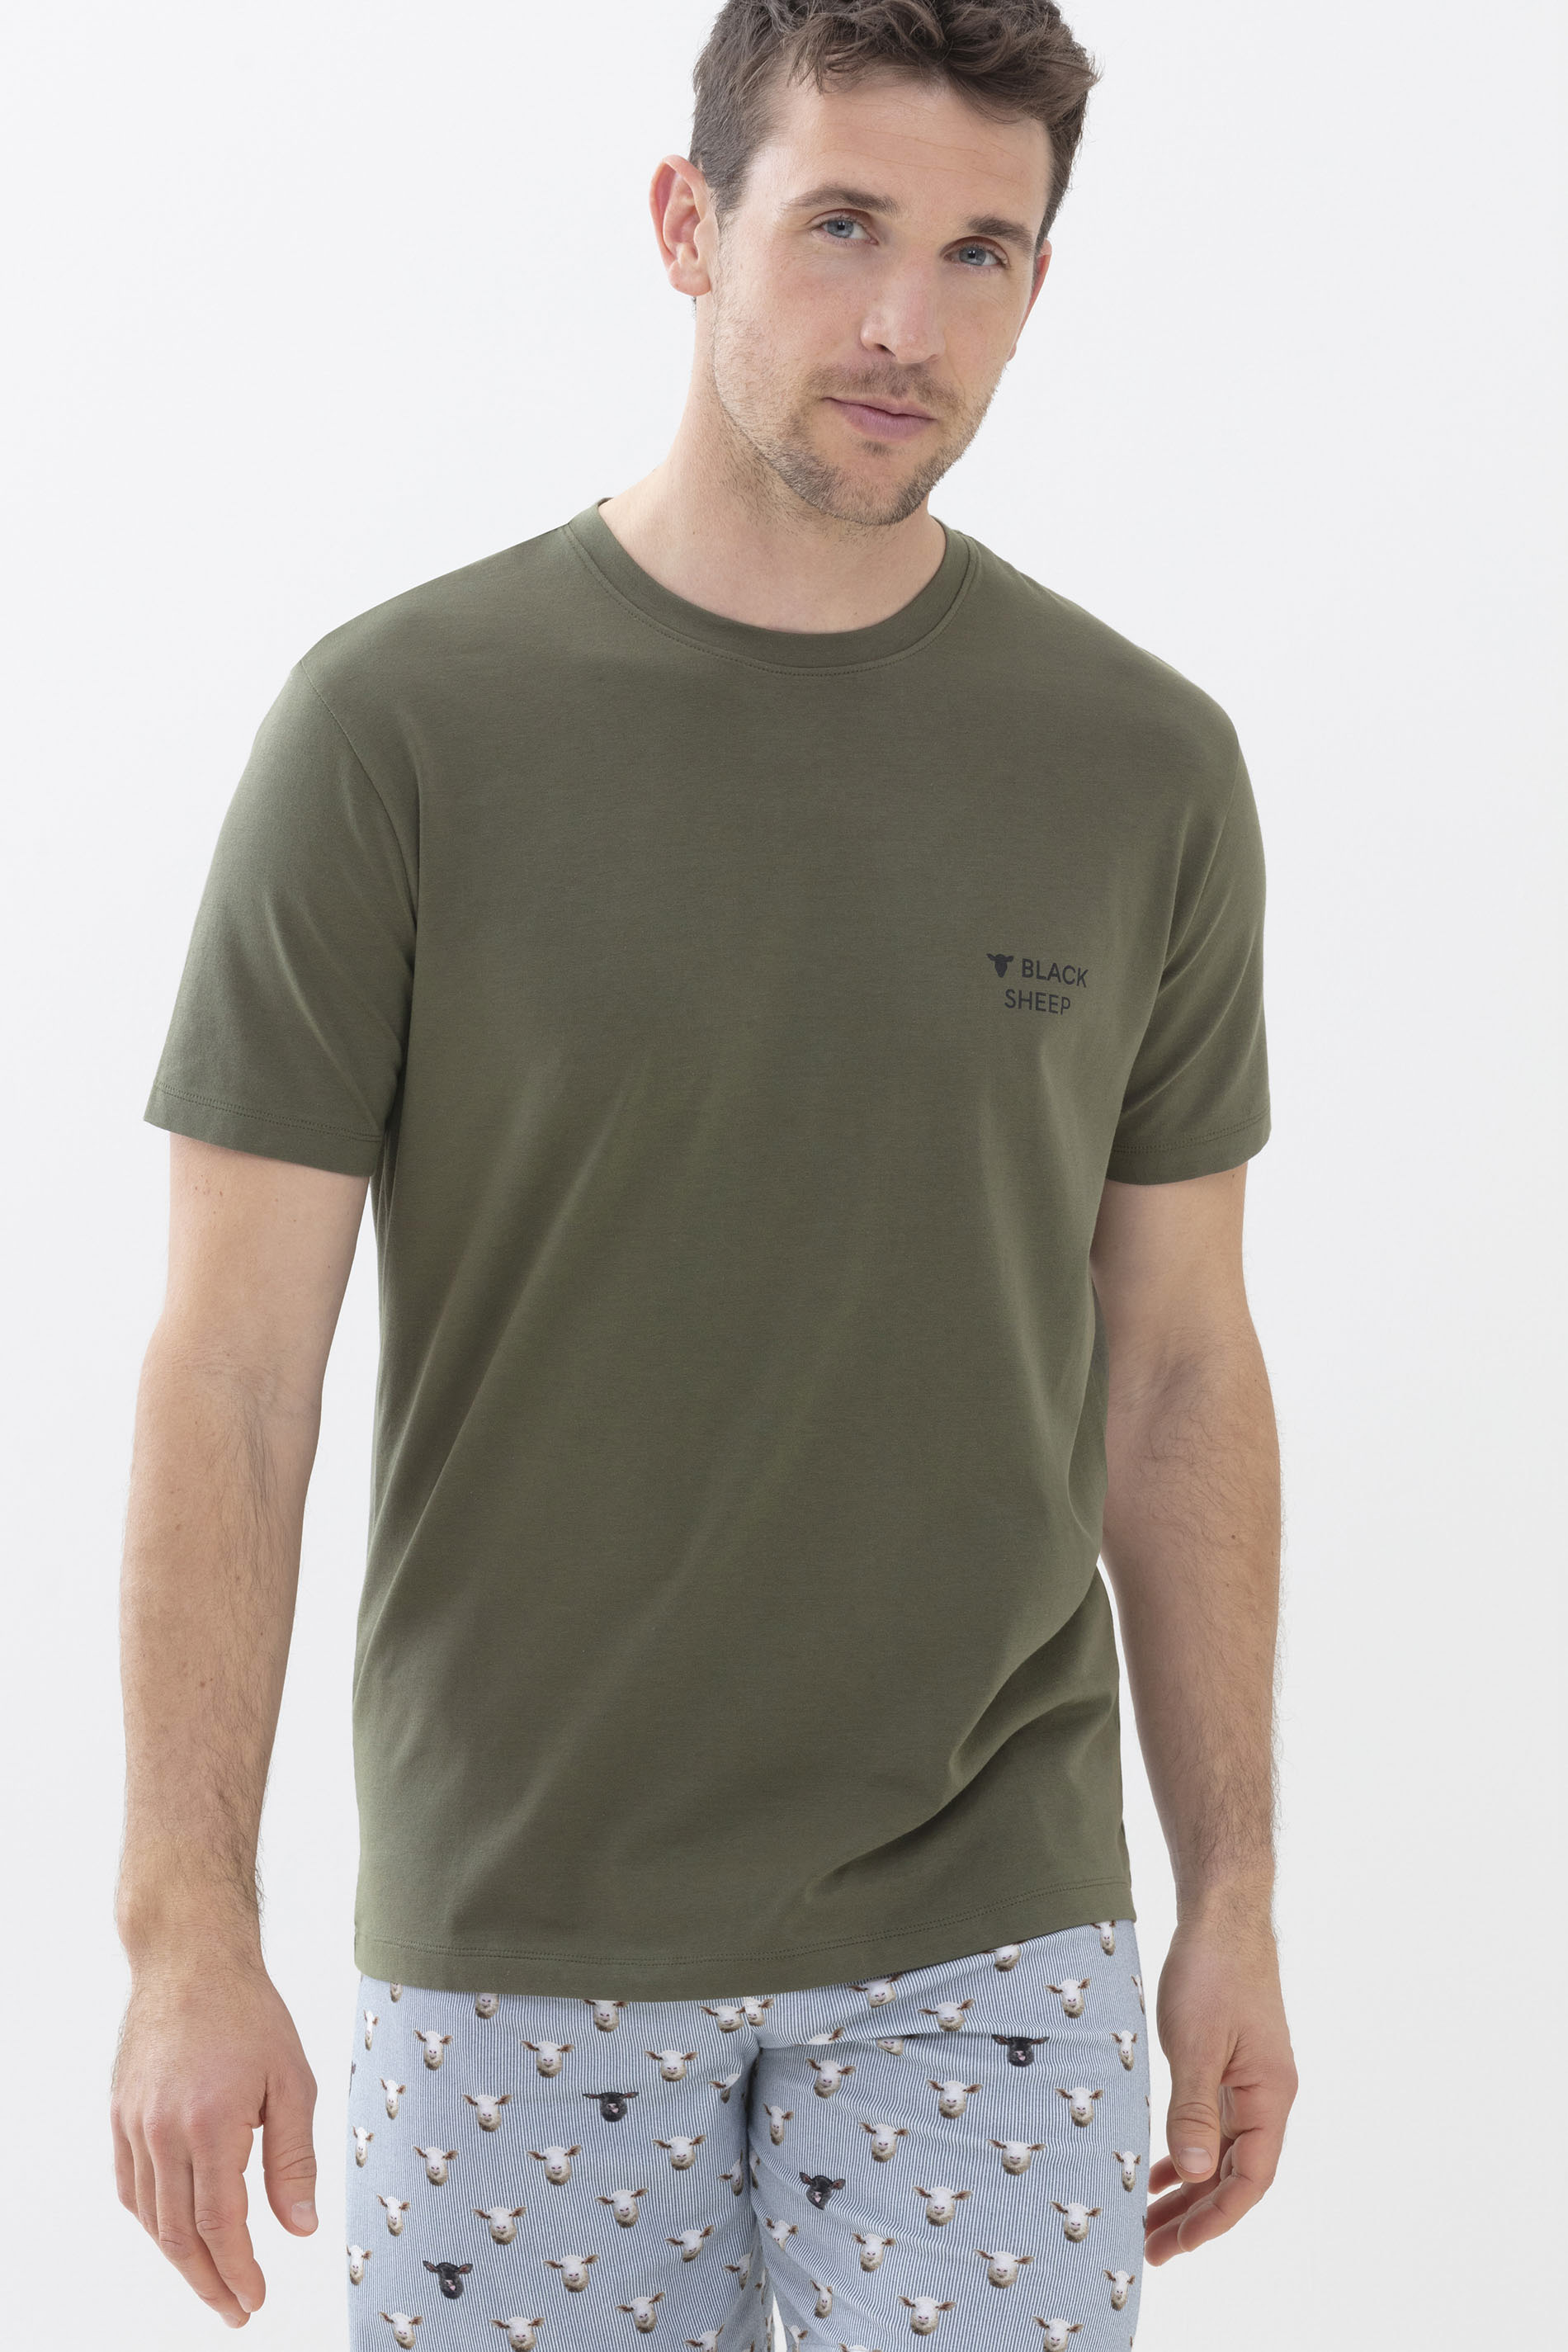 T-Shirt Khaki Serie RE:THINK BLACK Frontansicht | mey®